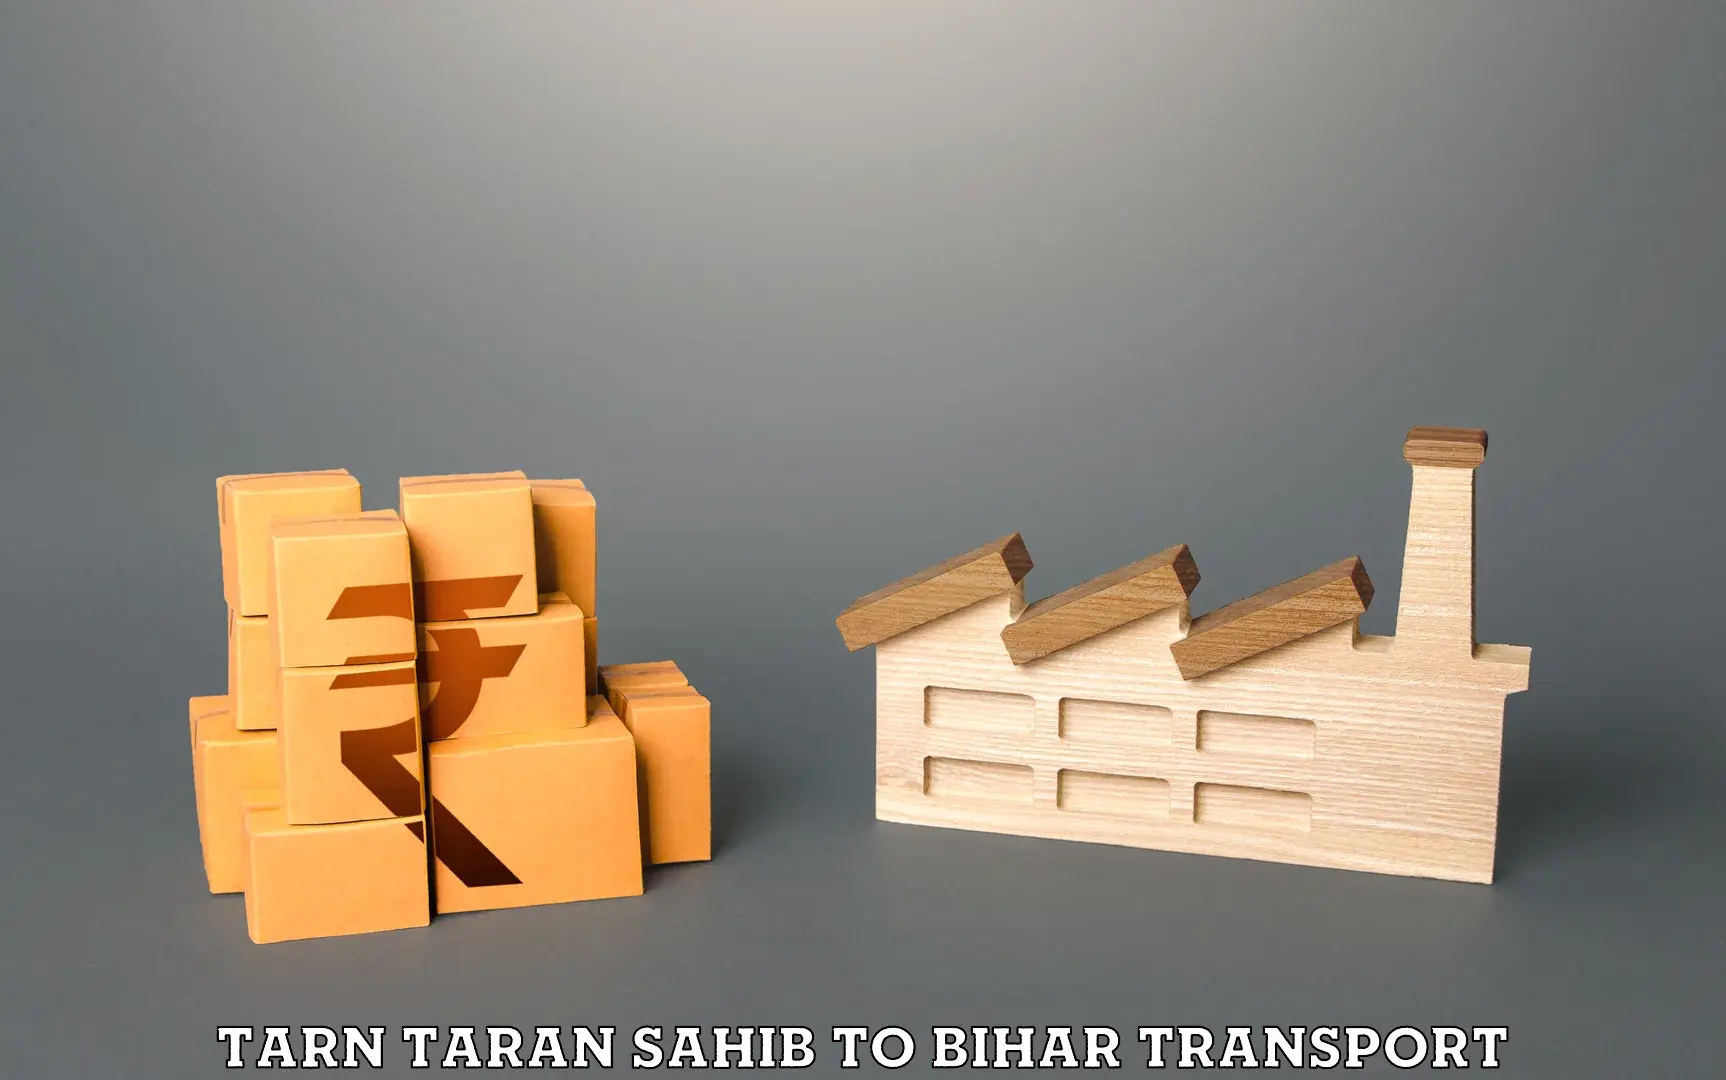 Online transport service Tarn Taran Sahib to Malmaliya